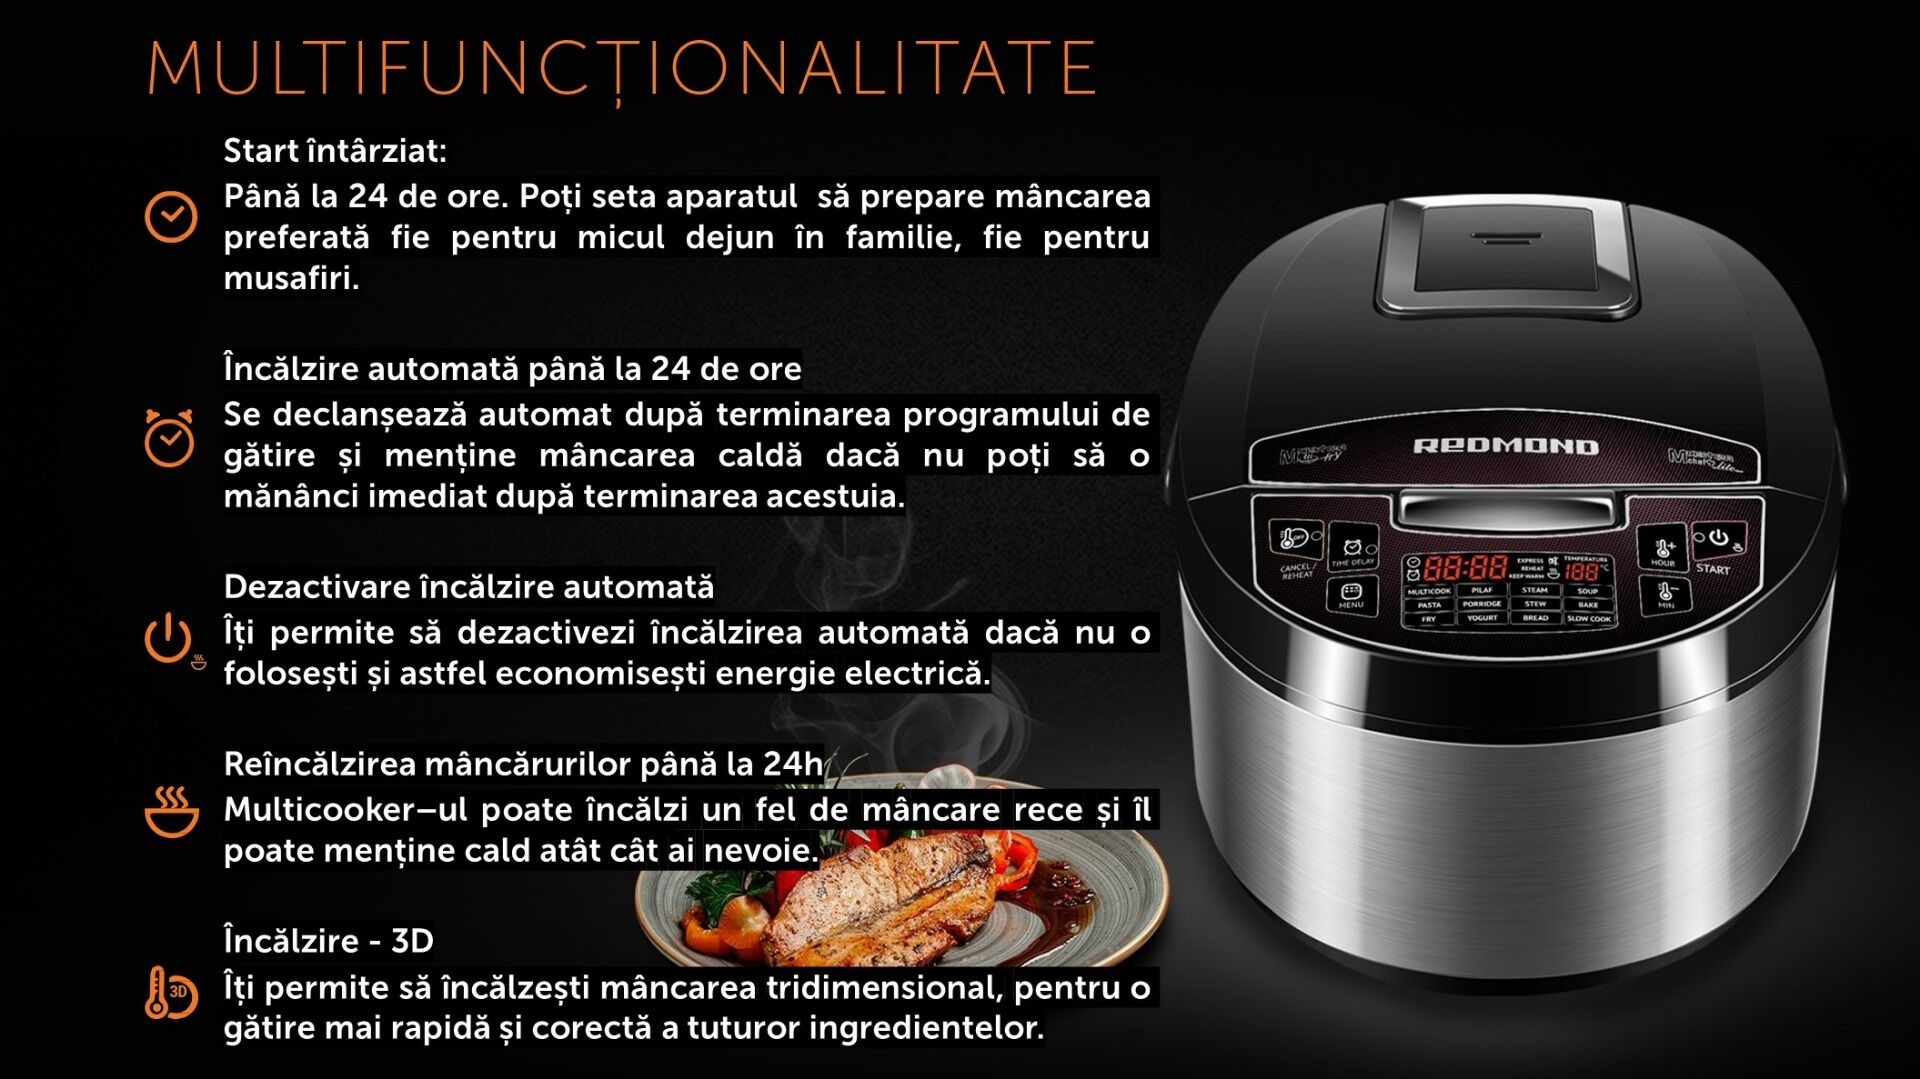 Multicooker Redmond RMK-M451E, 5 Litri, 40 programe, 1000 W, Negru/Inox